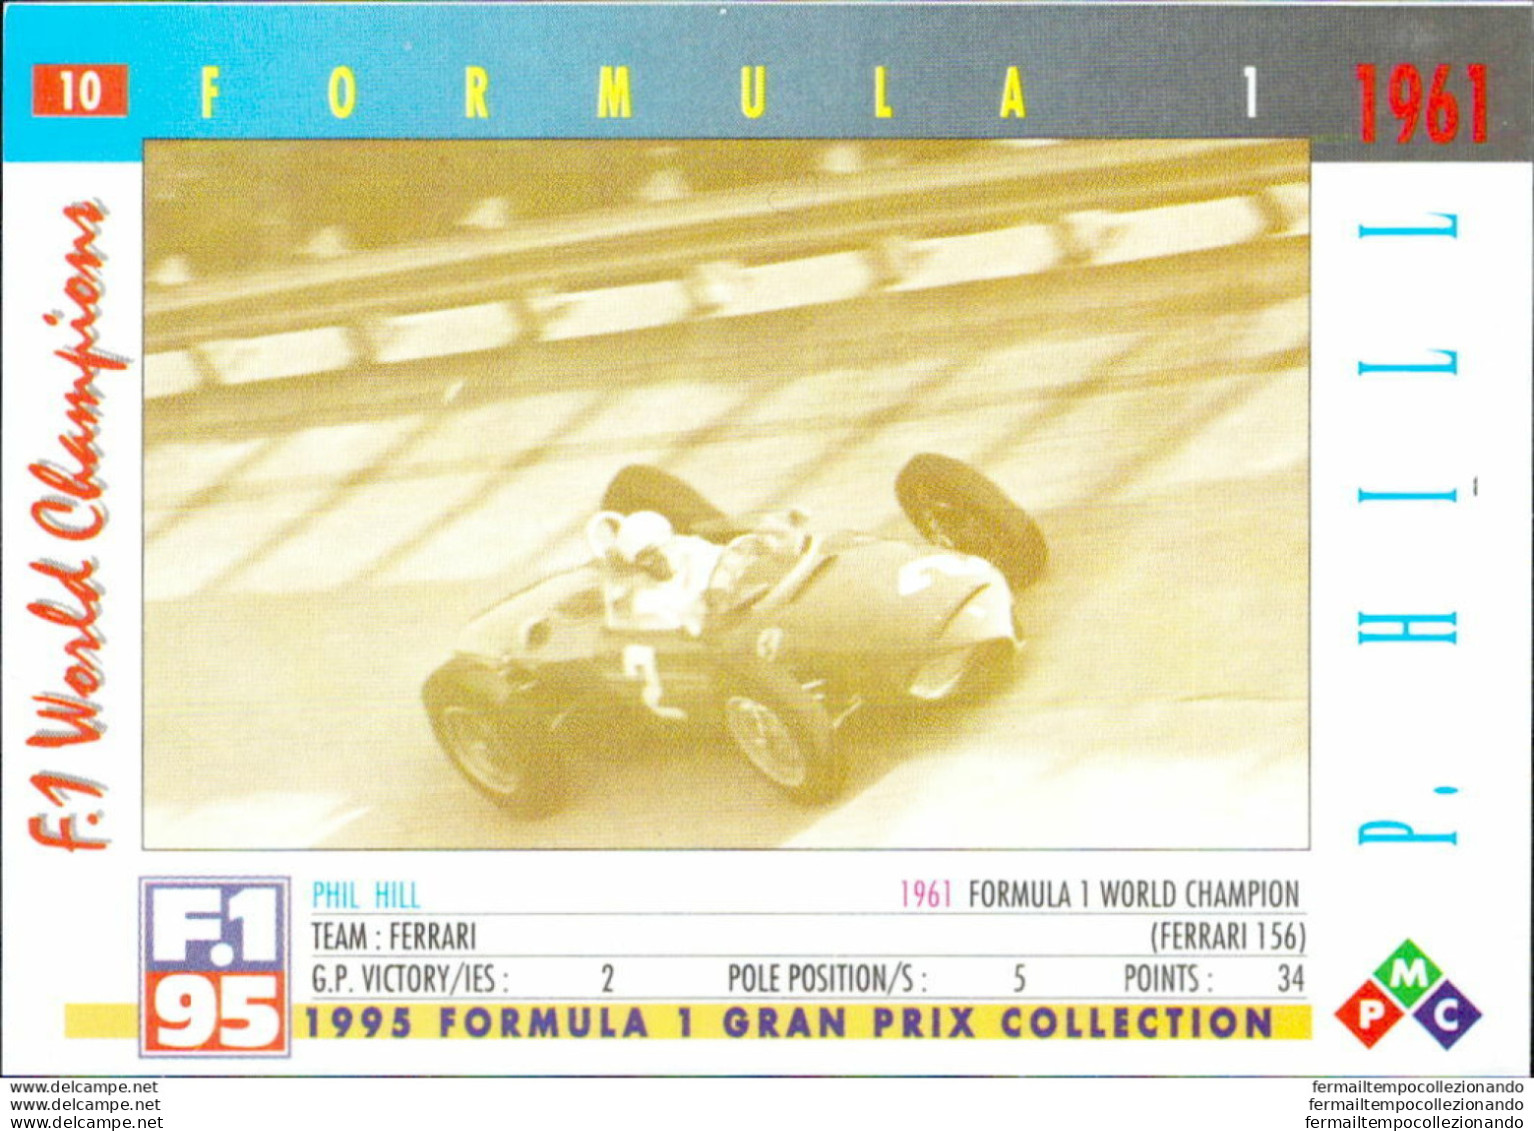 Bh10 1995 Formula 1 Gran Prix Collection Card P.hill N 10 - Catalogues